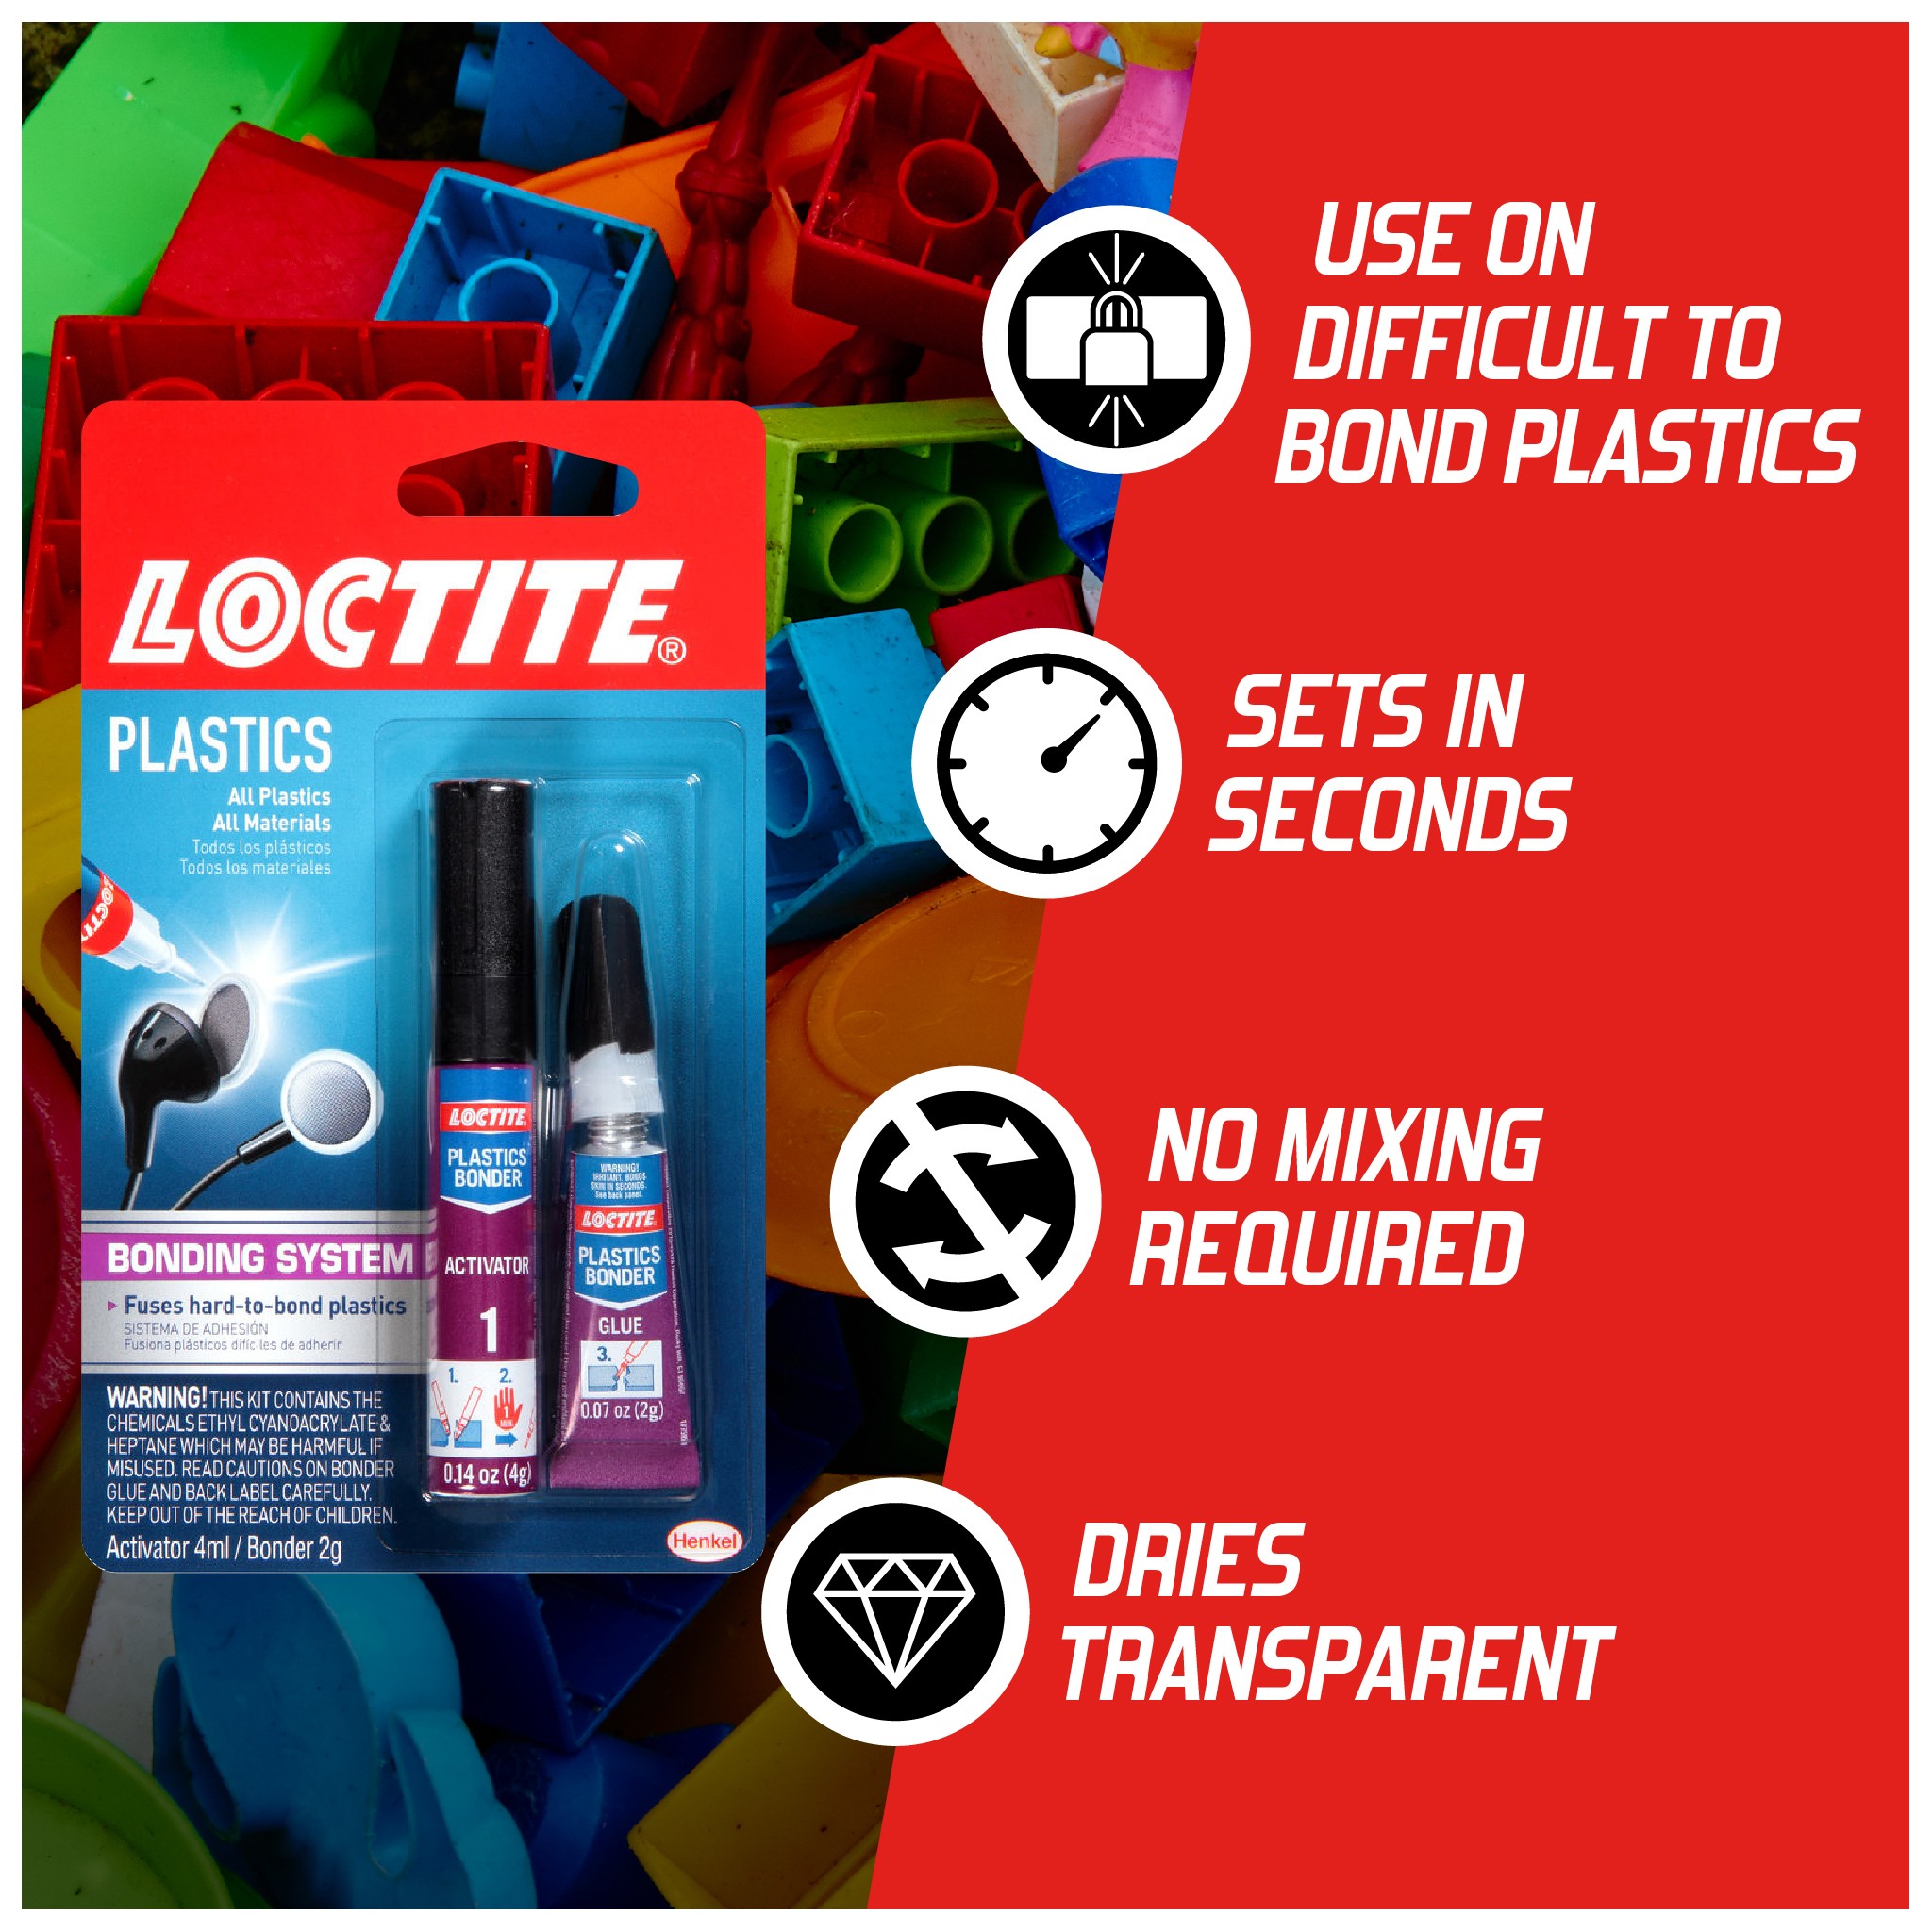 Loctite Super Glue Gel Control, UV Resins, Cements, Epoxies